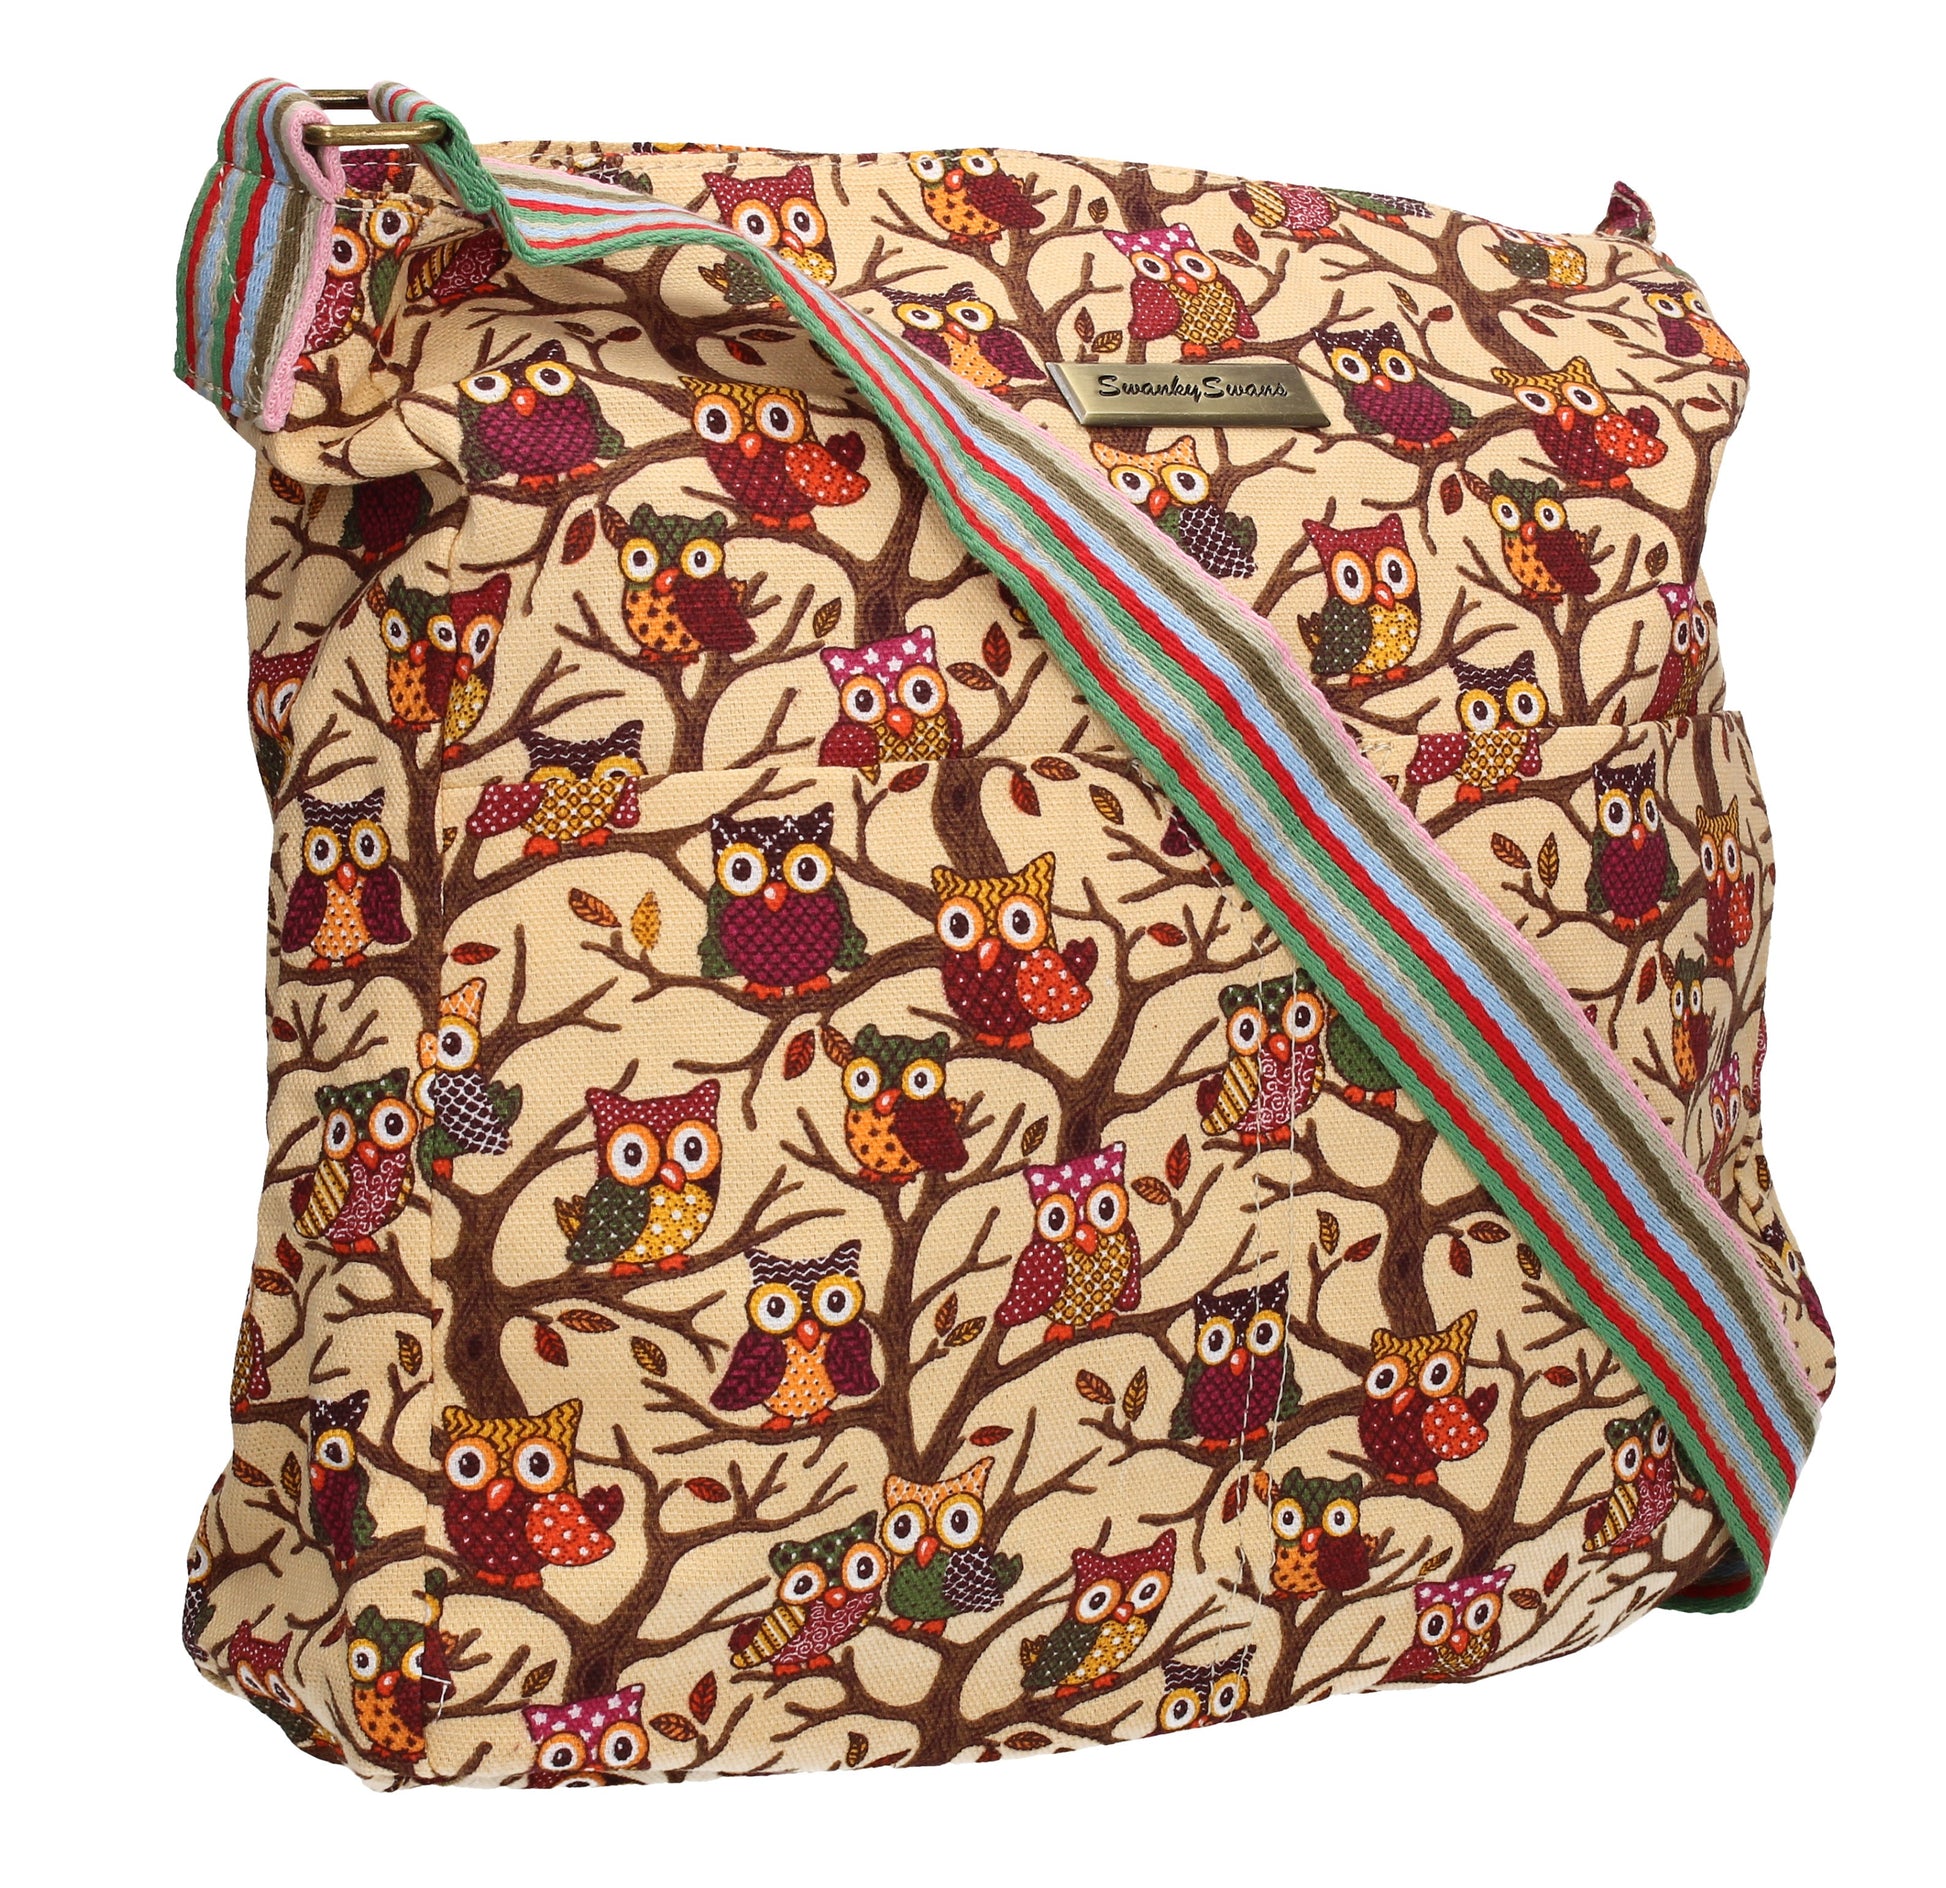 Swanky Swans Classic Tree Owl Print Crossbody Bag in BeigeWomens Girls Boys School Crossbody Animal Cute